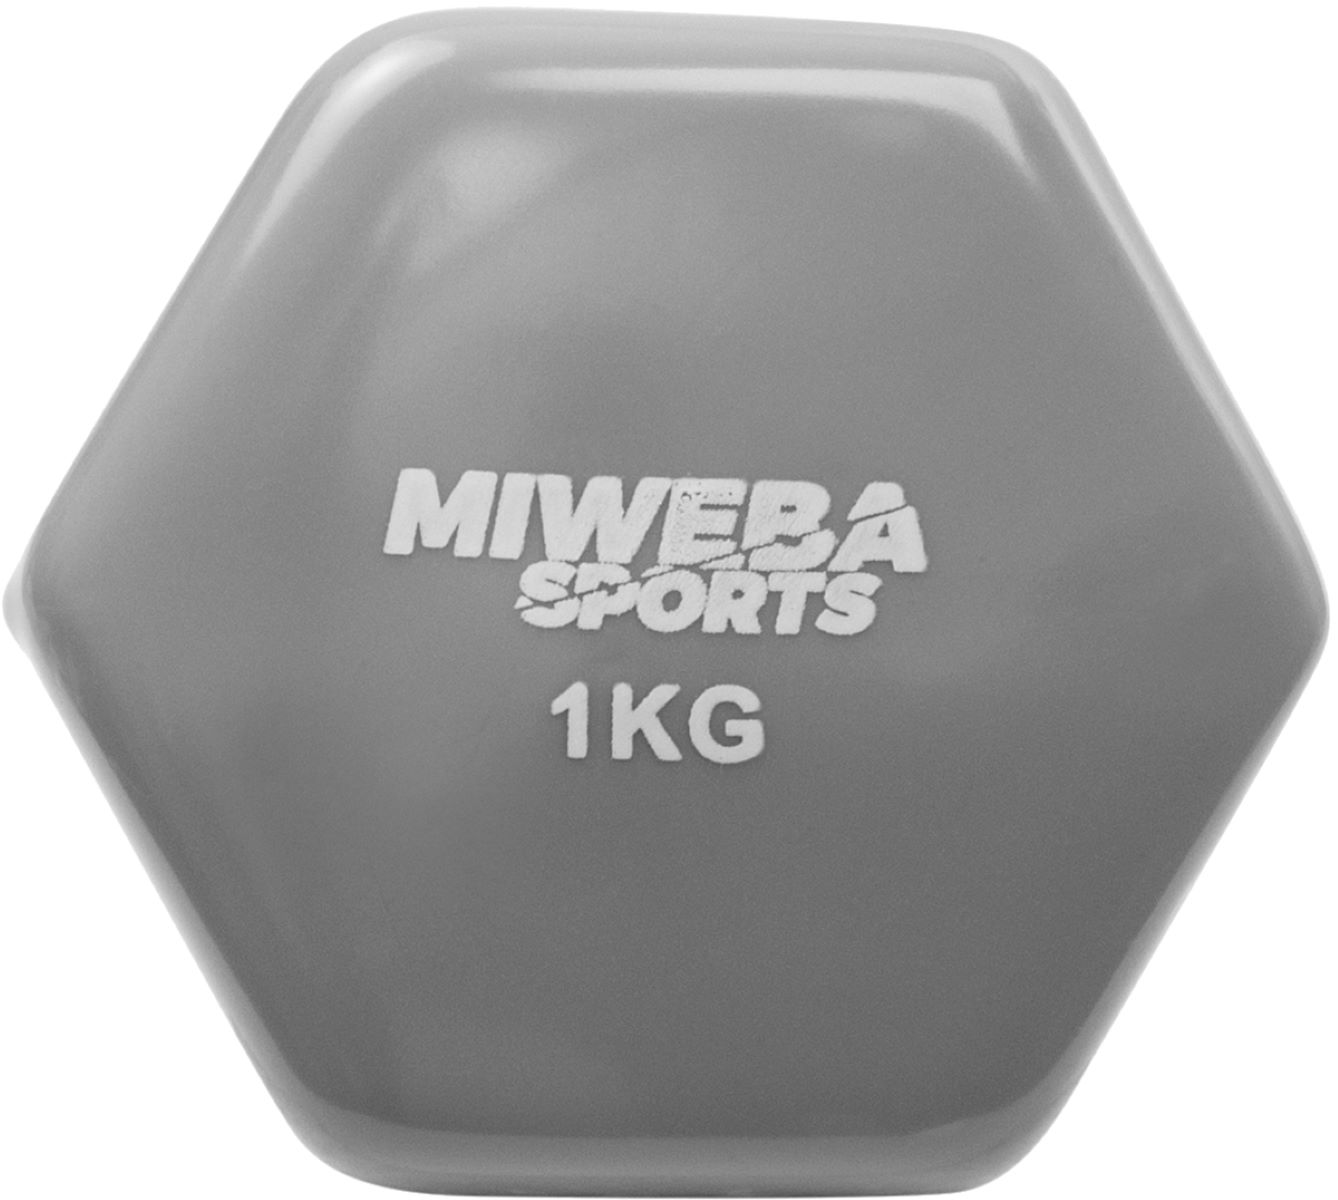 MIWEBA SPORTS NKH110 Vinyl-Hanteln Set, Kurzhantel, grau